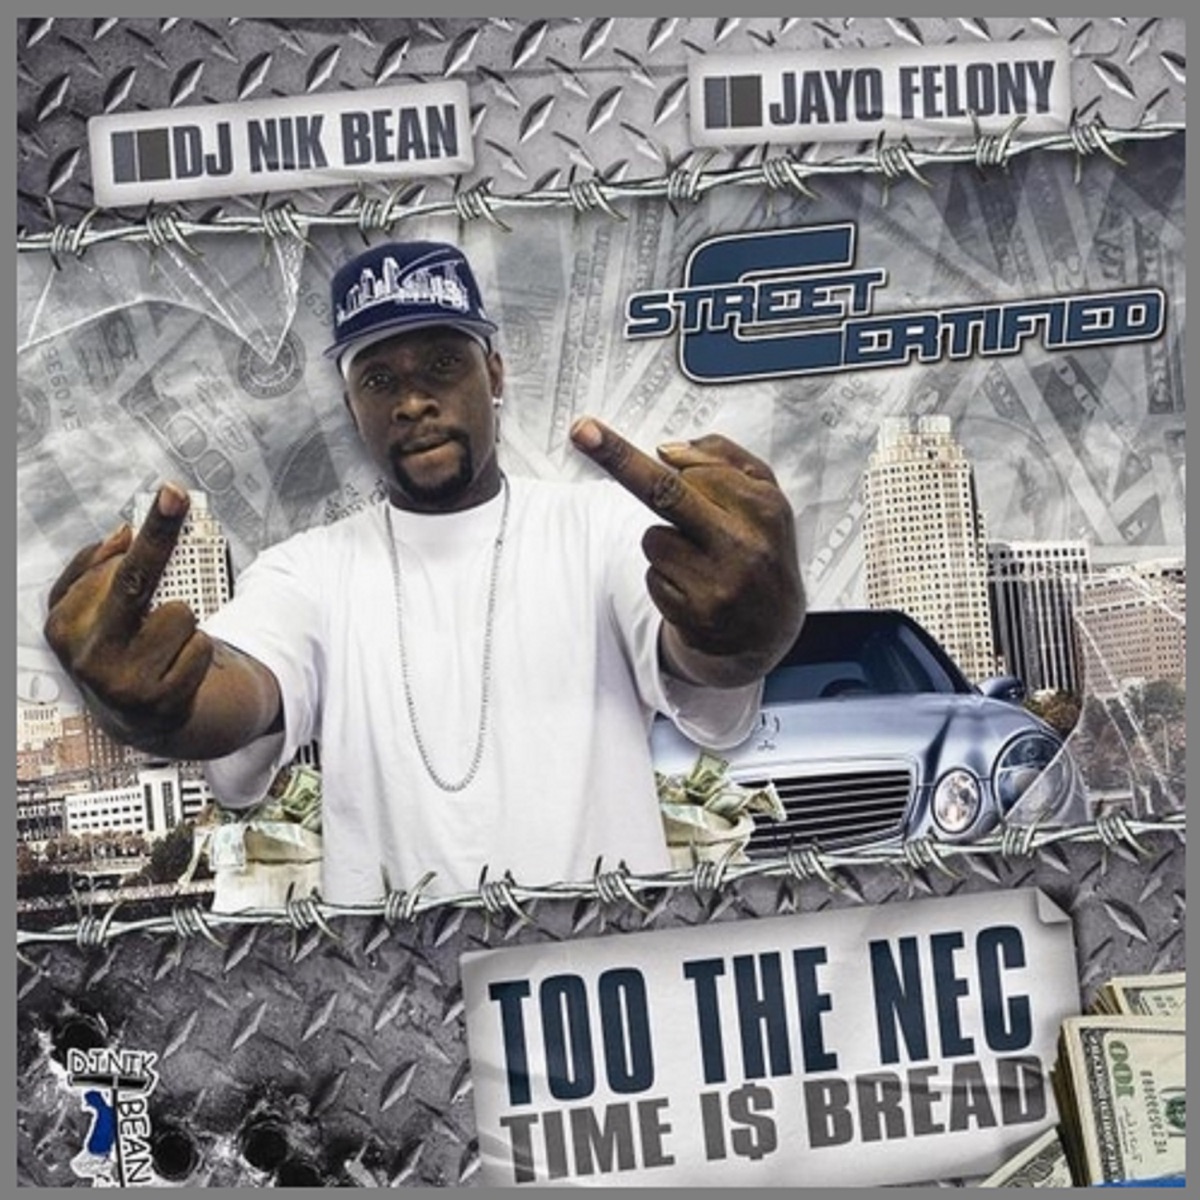 Jayo Felony, DJ Nik Bean, Street Certified - Too The Nec Time Is Bread